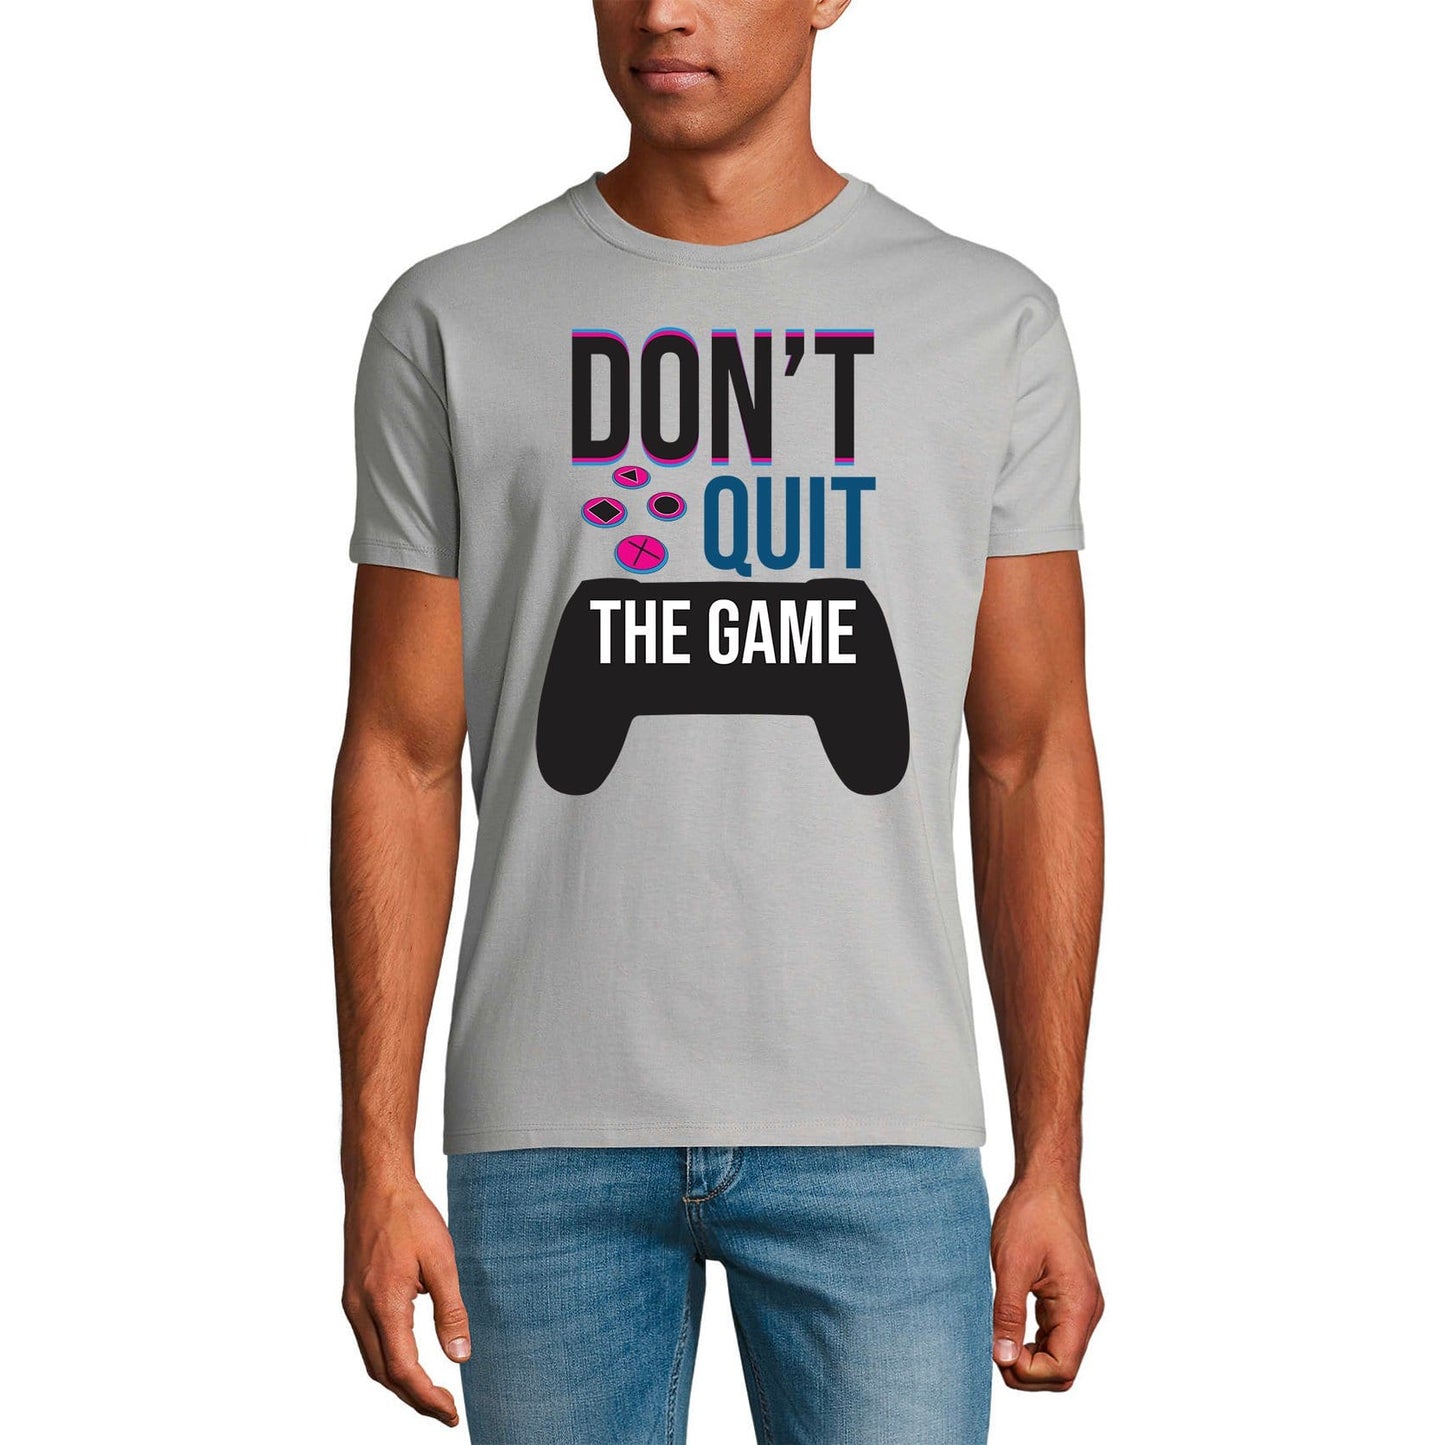 ULTRABASIC Men's Gaming T-Shirt Don't Quit the Game - Funny Humor Gamer Tee Shirt